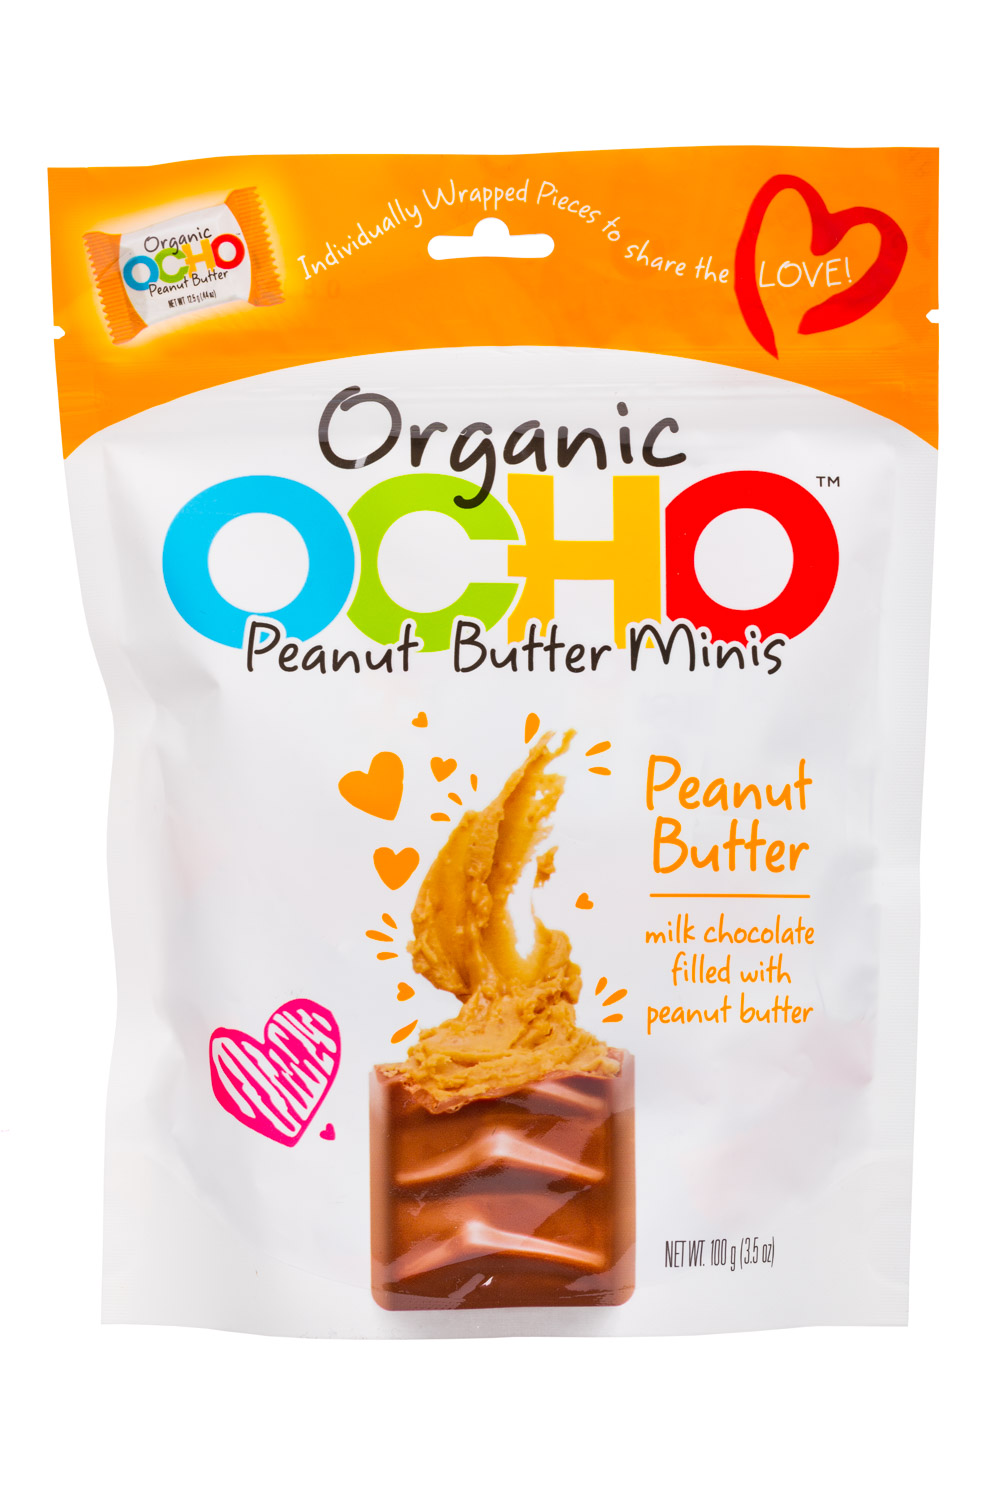 Organic Peanut Butter Minis (2019)